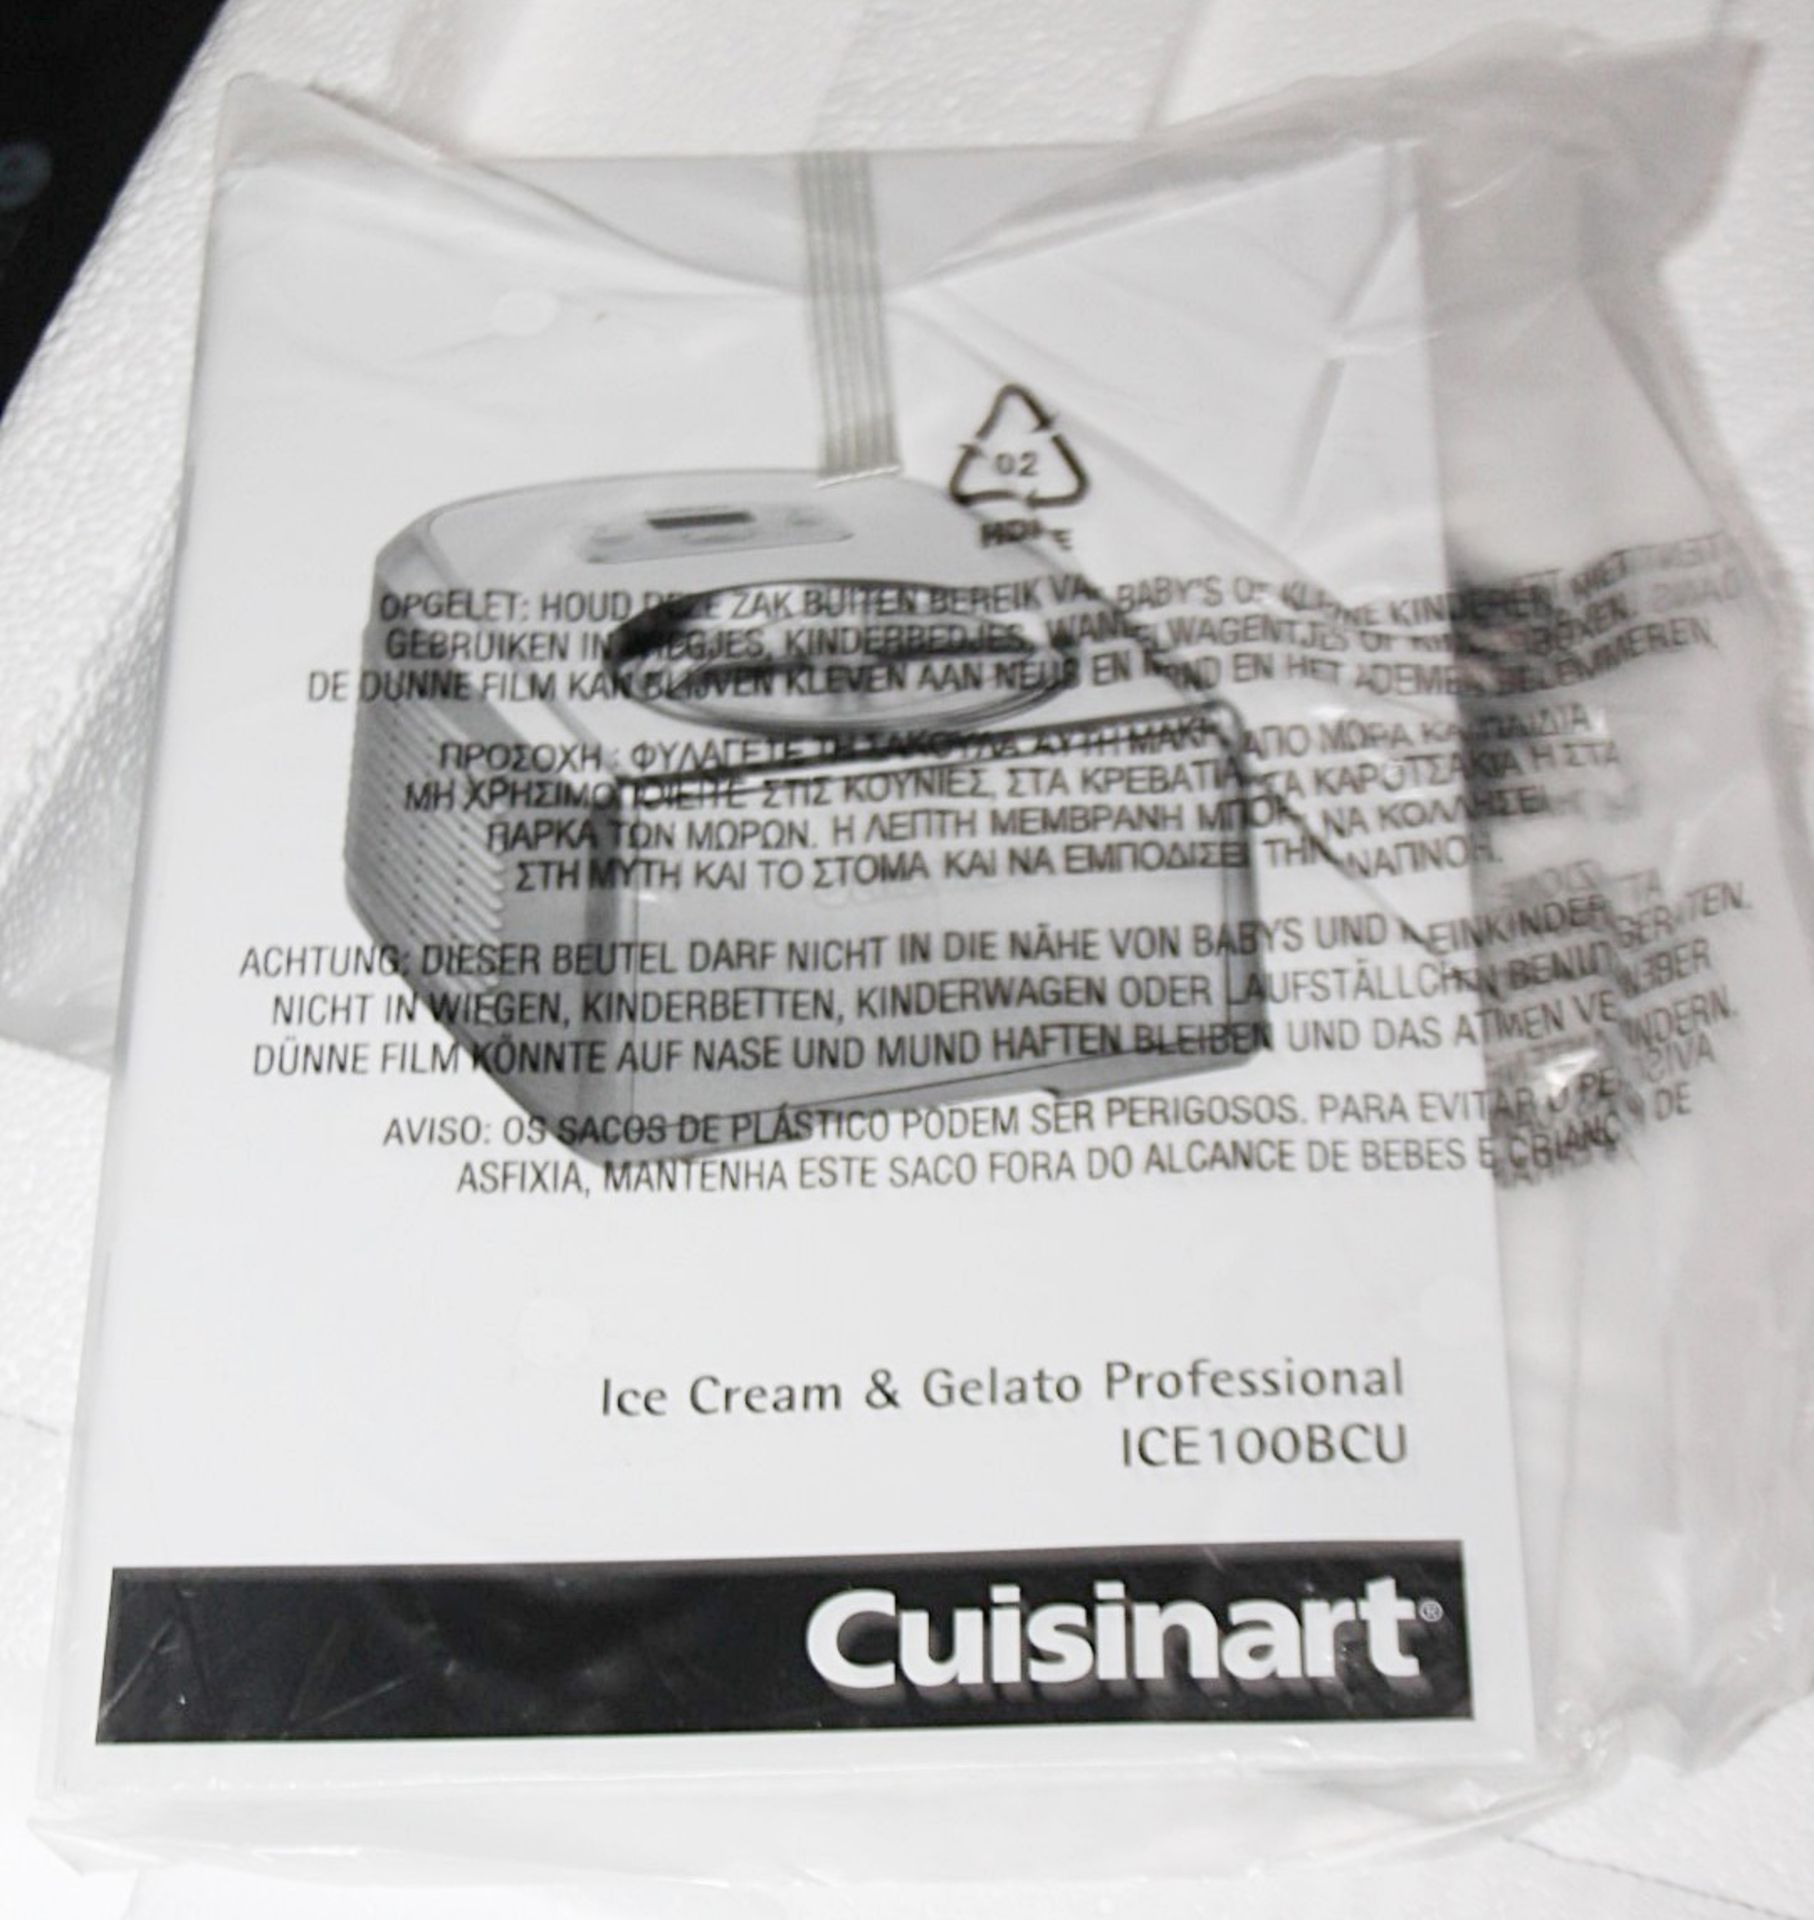 1 x CUISINART Professional Gelato / Ice Cream Maker - Original Price £249.00 - Boxed Stock - Image 13 of 13